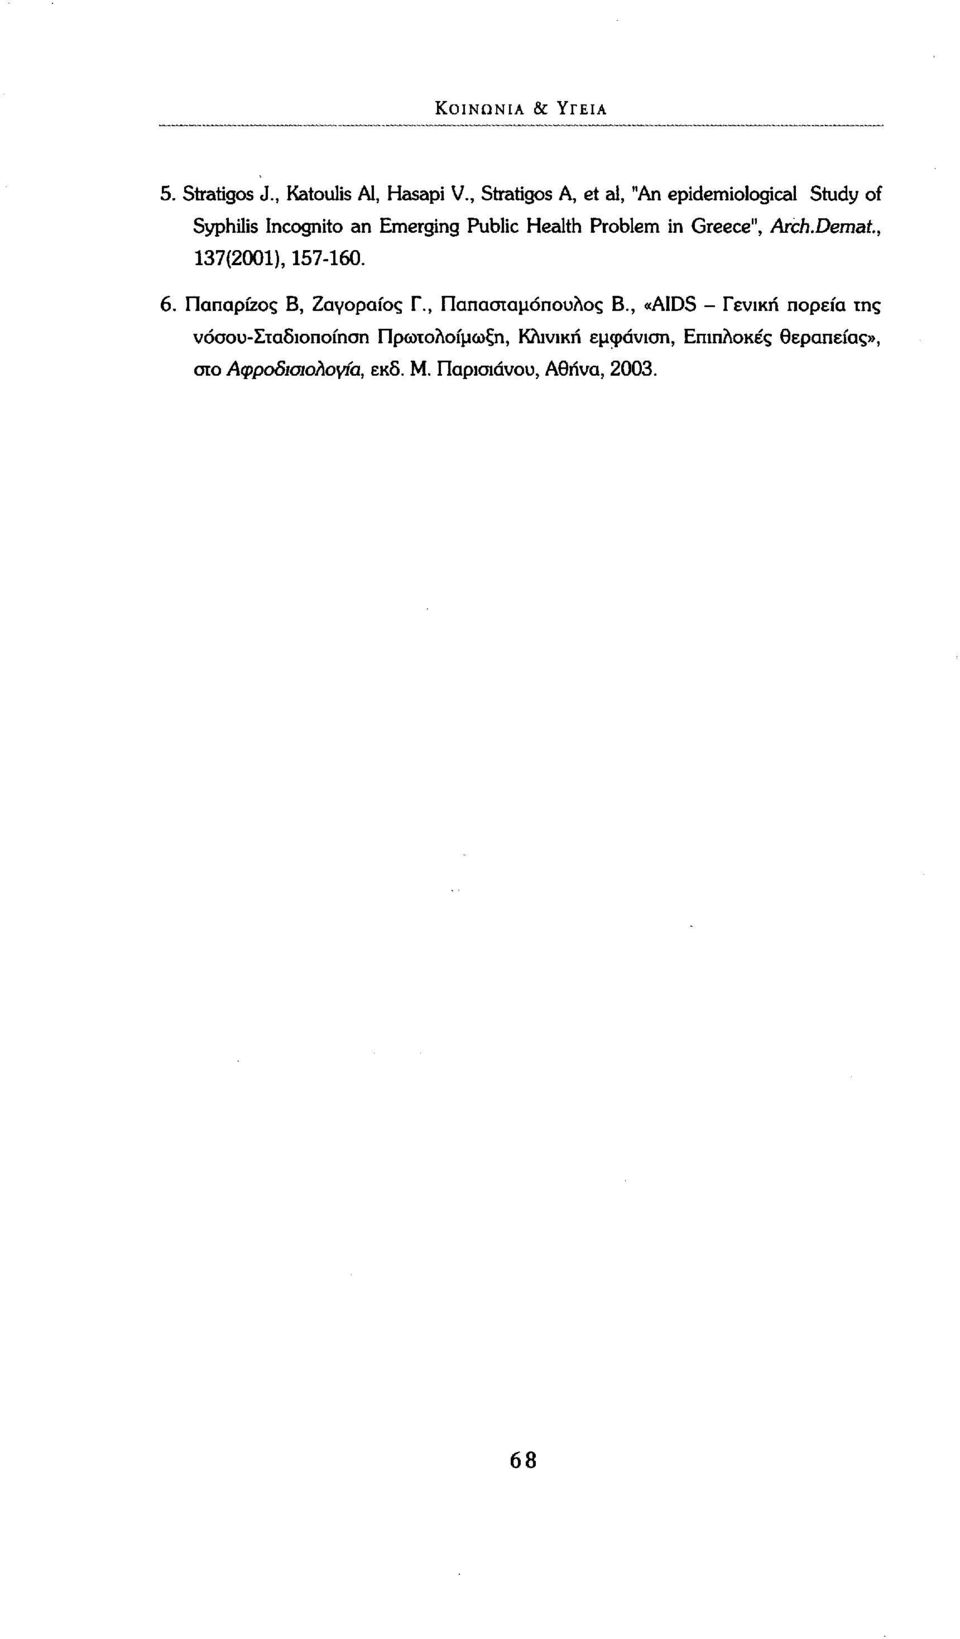 Problem in Greece", Arch.Demat, 137(2001), 157-160. 6. Παπαρίζος Β, Ζαγοραίος Γ., Παπασταμόπουλος Β.